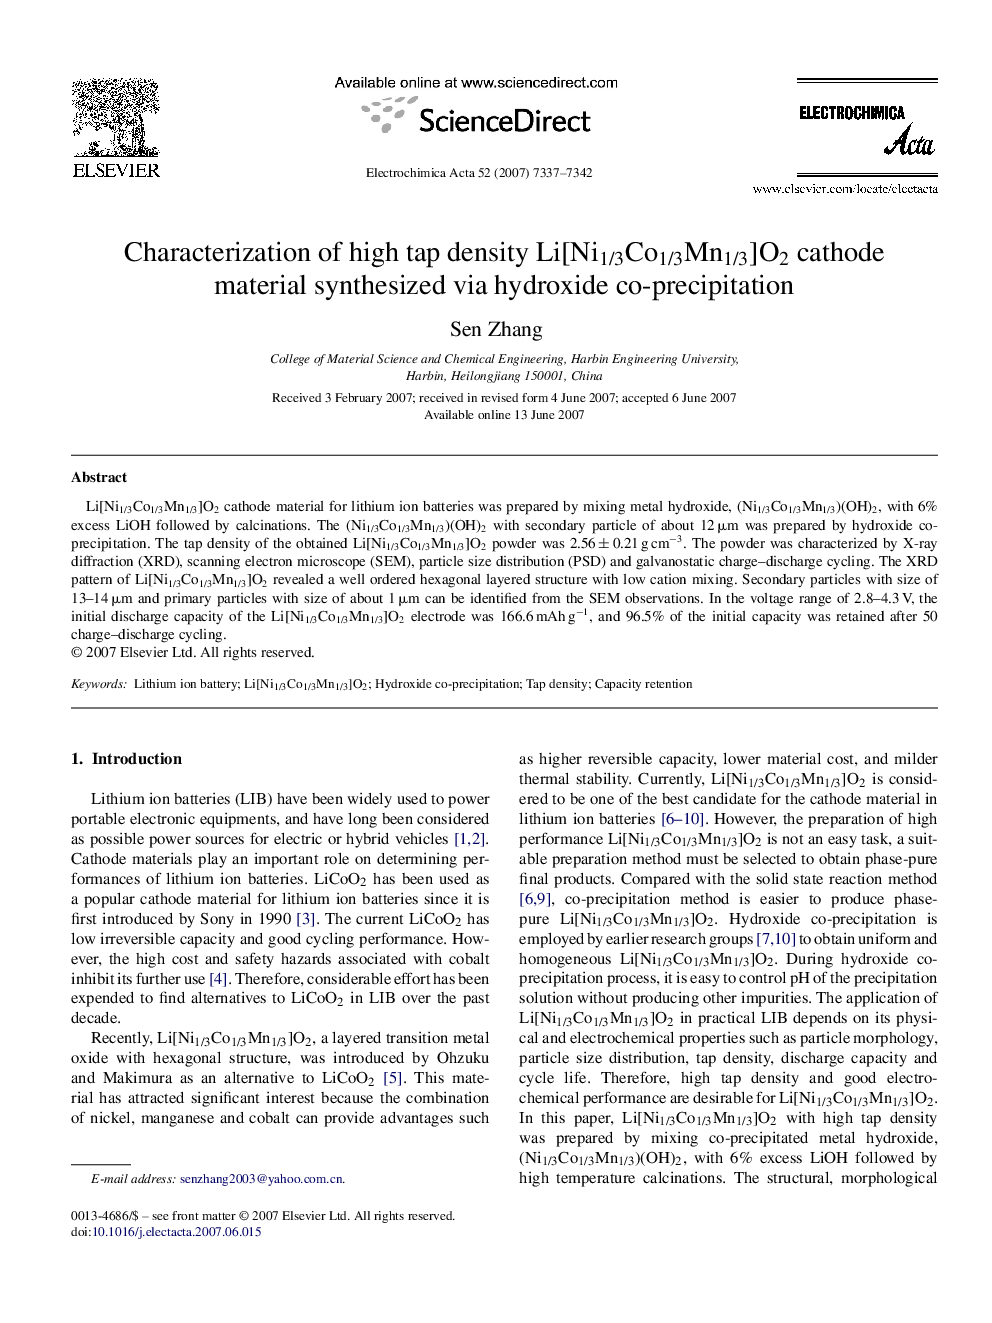 Characterization of high tap density Li[Ni1/3Co1/3Mn1/3]O2 cathode material synthesized via hydroxide co-precipitation